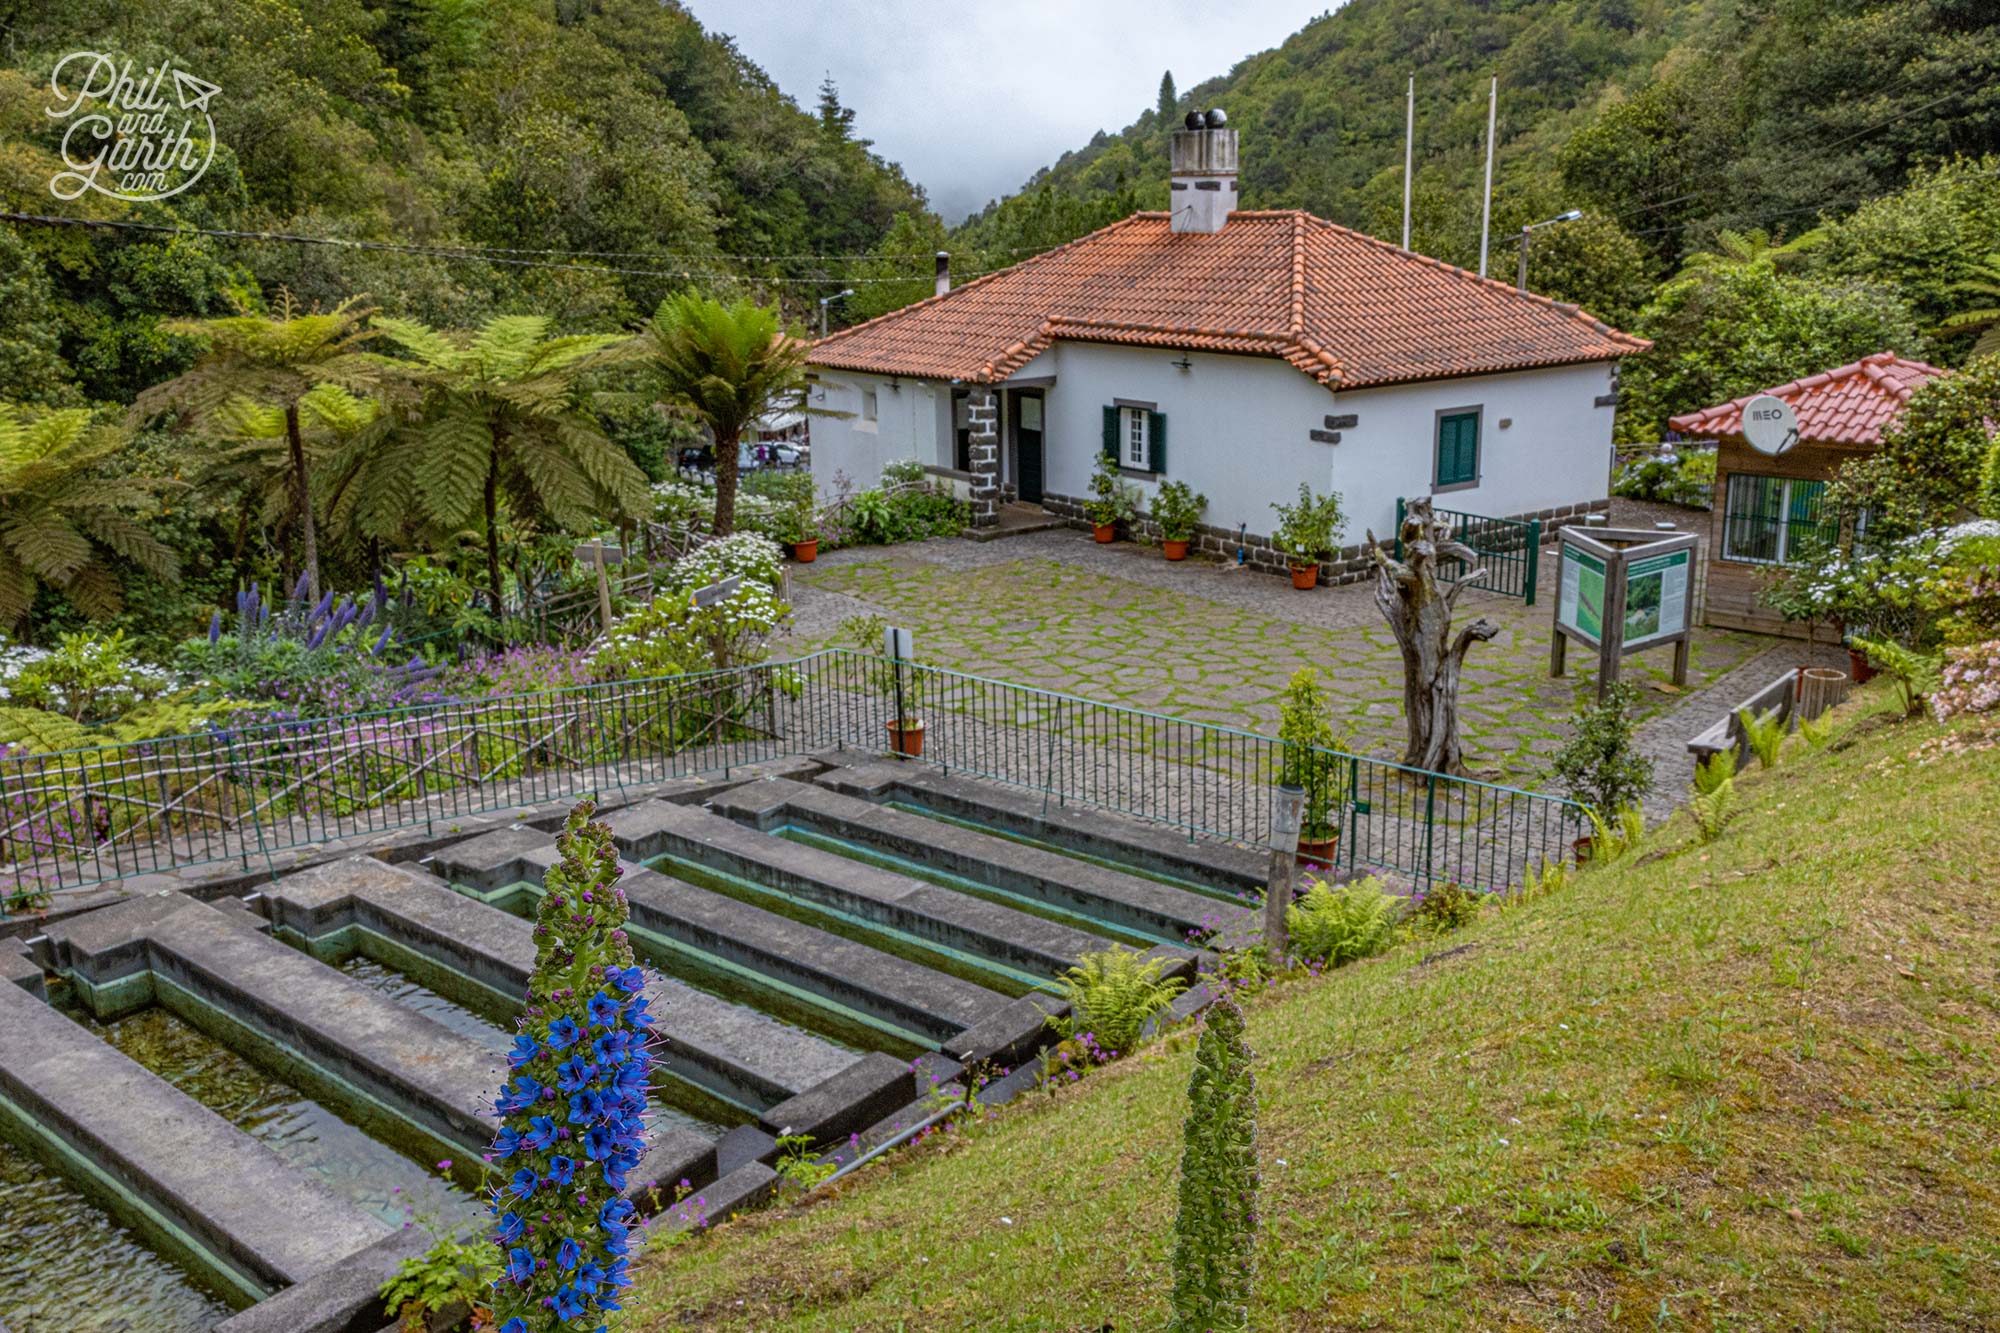 A trout farm at the small village of Ribeiro Frio